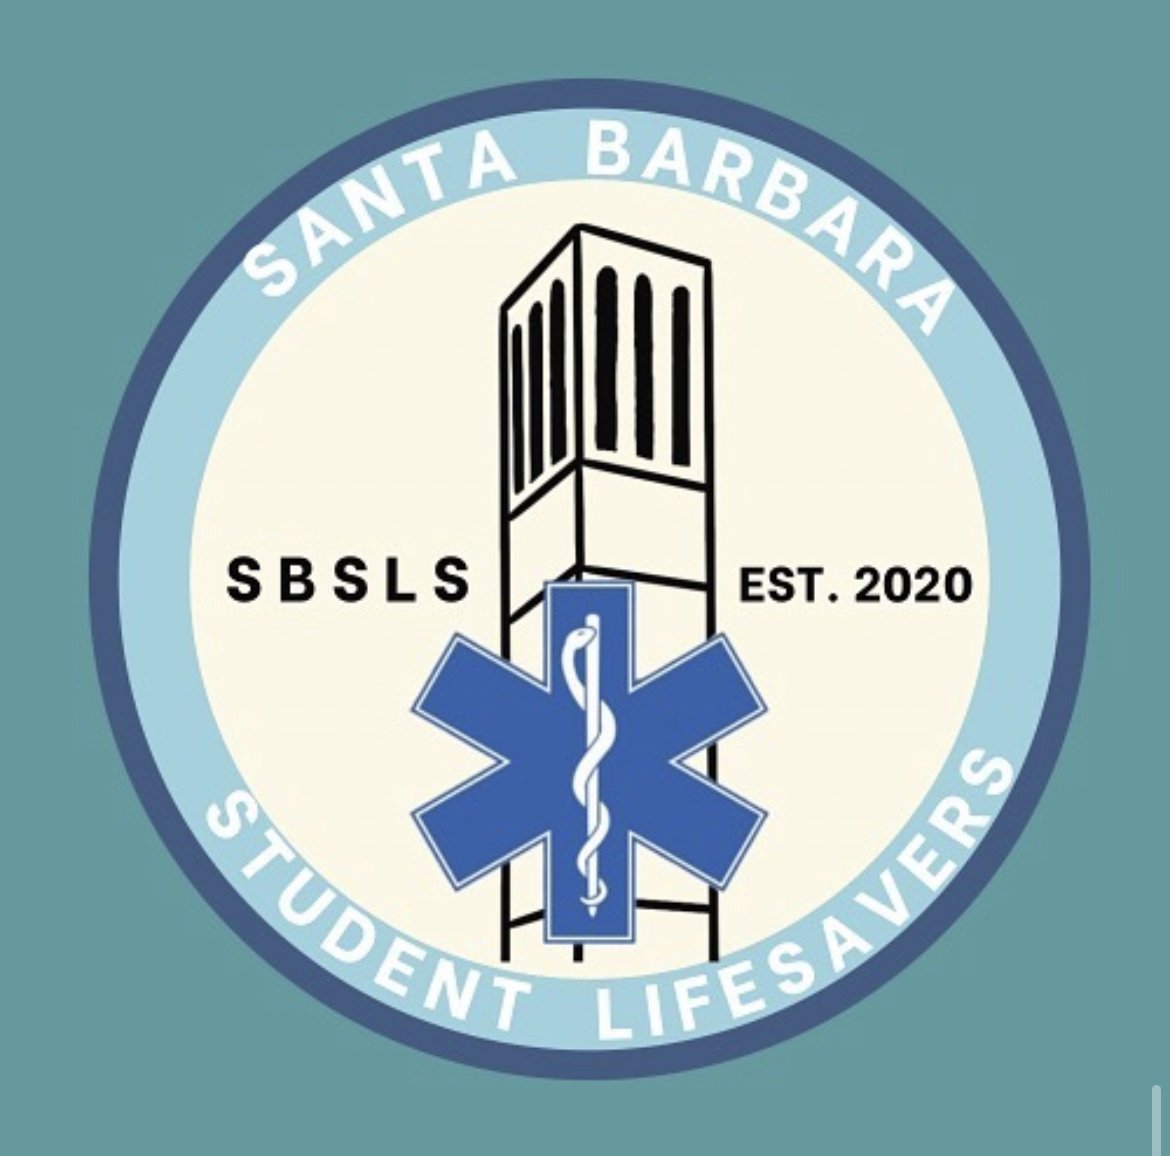 Santa Barbara Student Life Savers